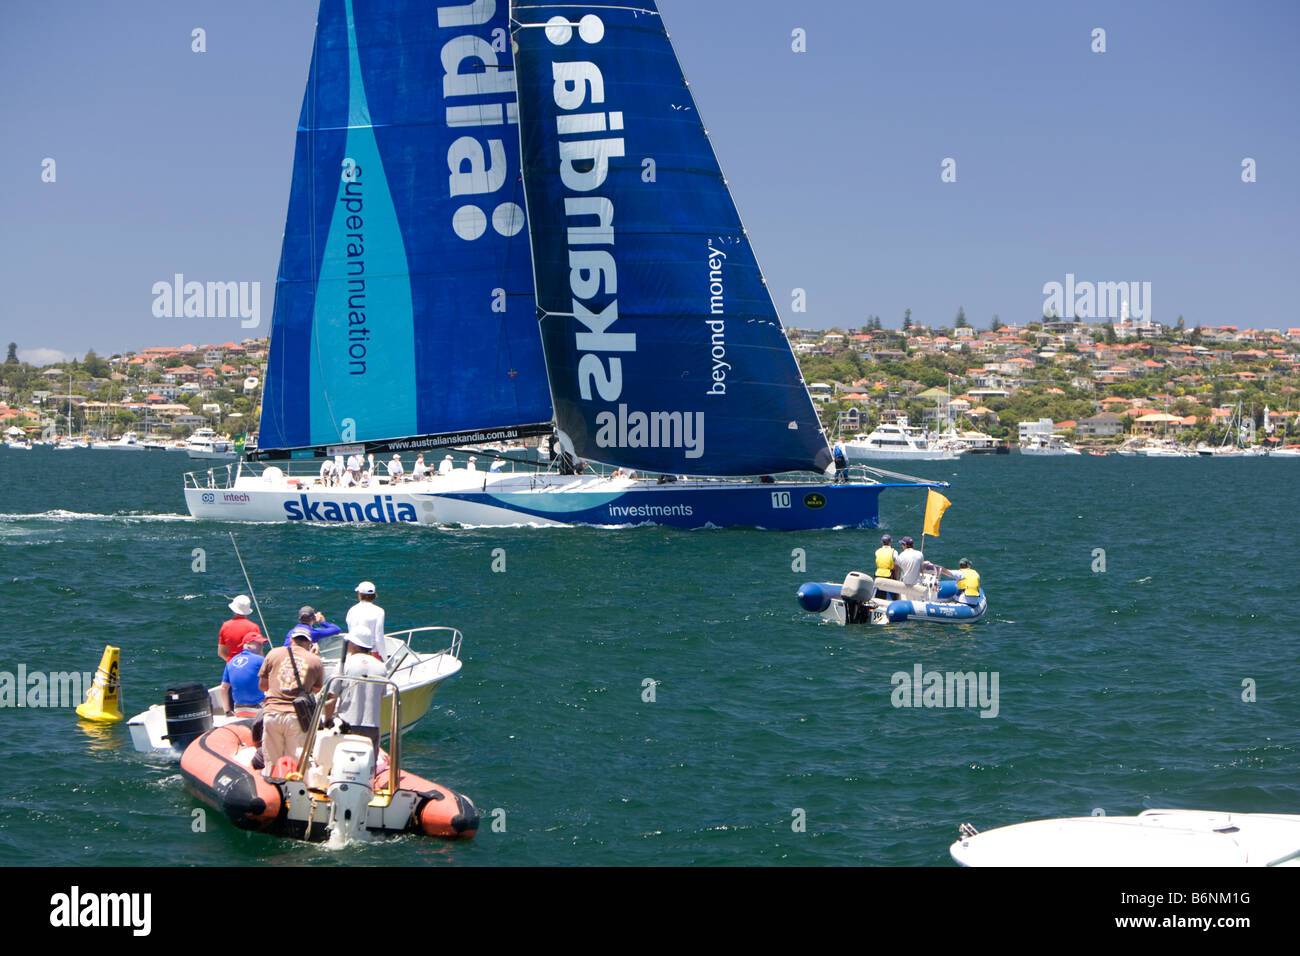 maxi yacht skandia prepares for the start of the sydney to hobart yacht race,sydney harbour,australia Stock Photo